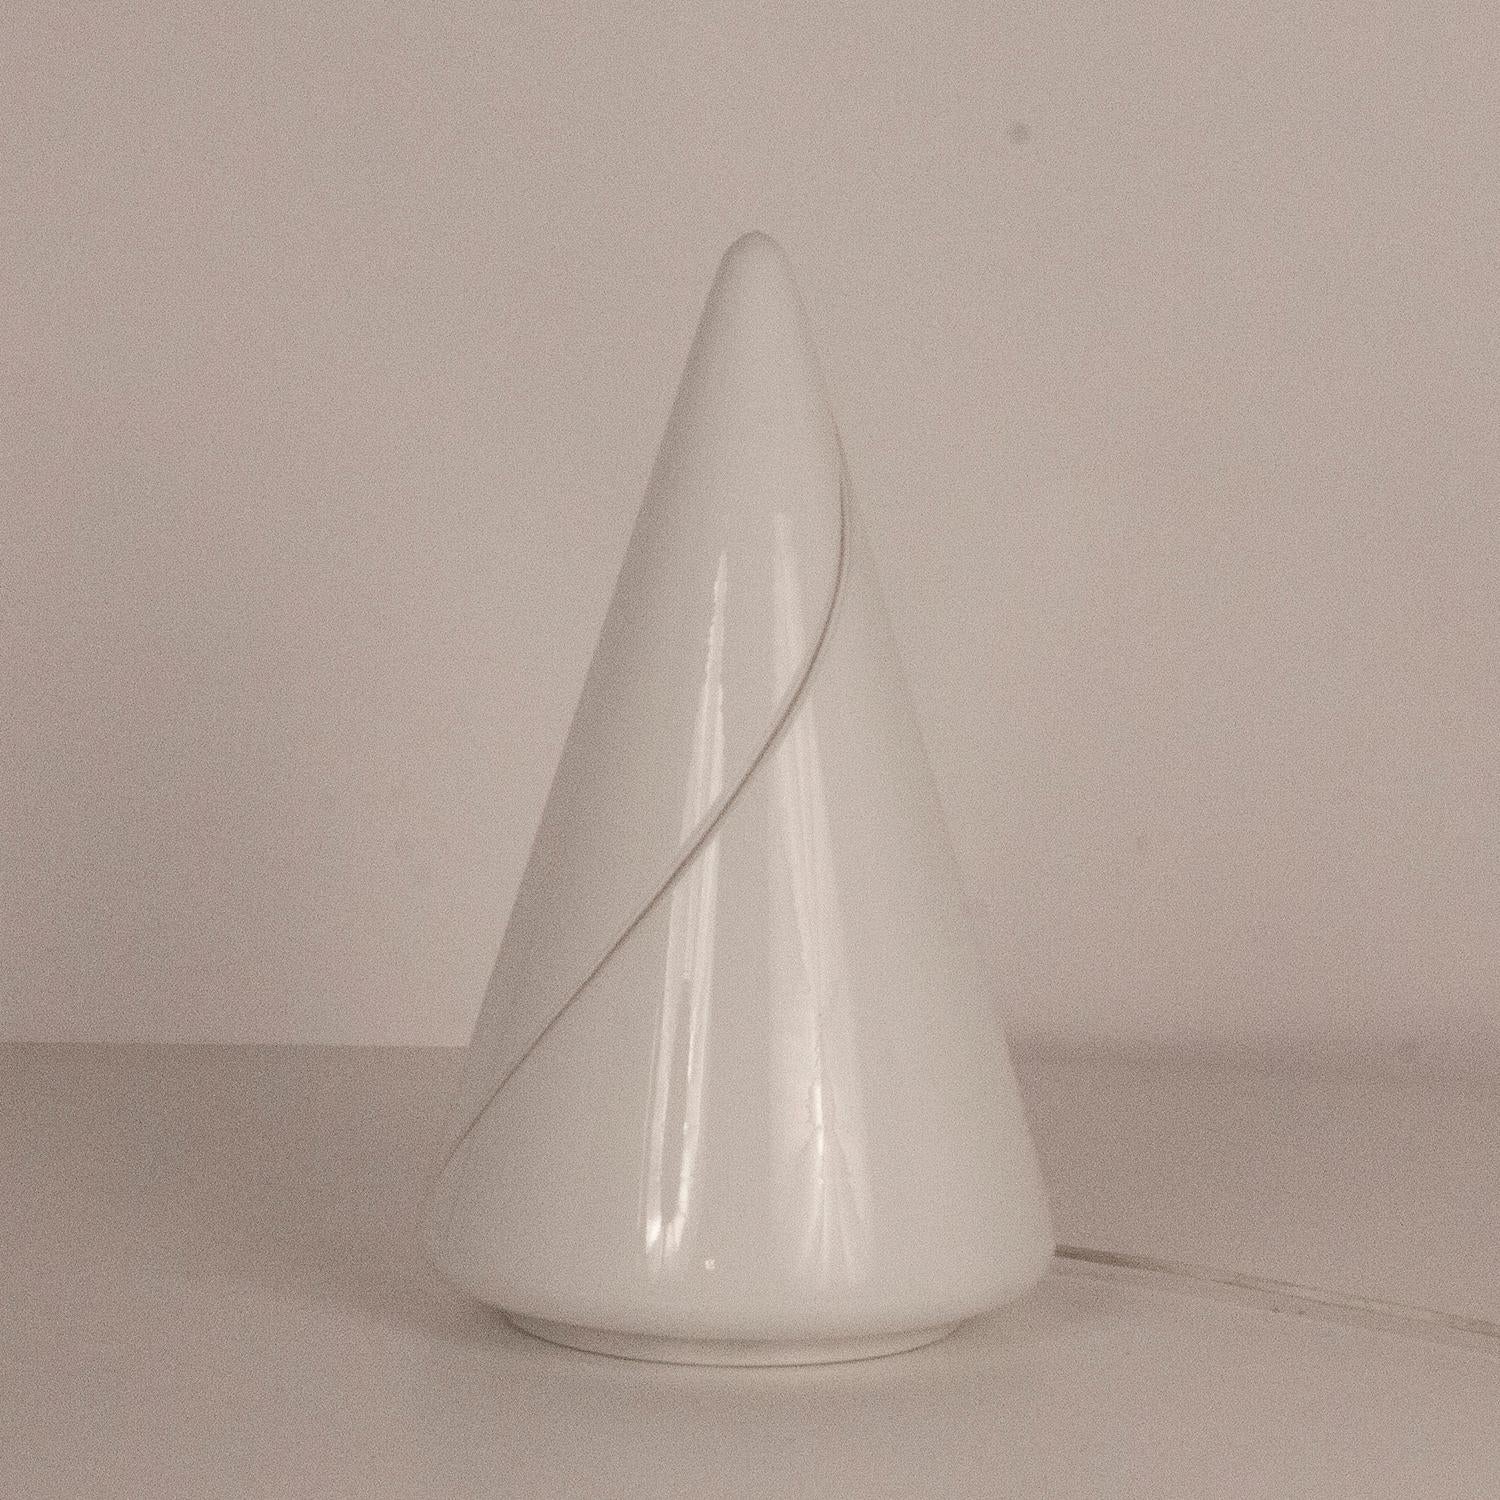 Murano glass lamp, cone shape, Italy, 1960s.